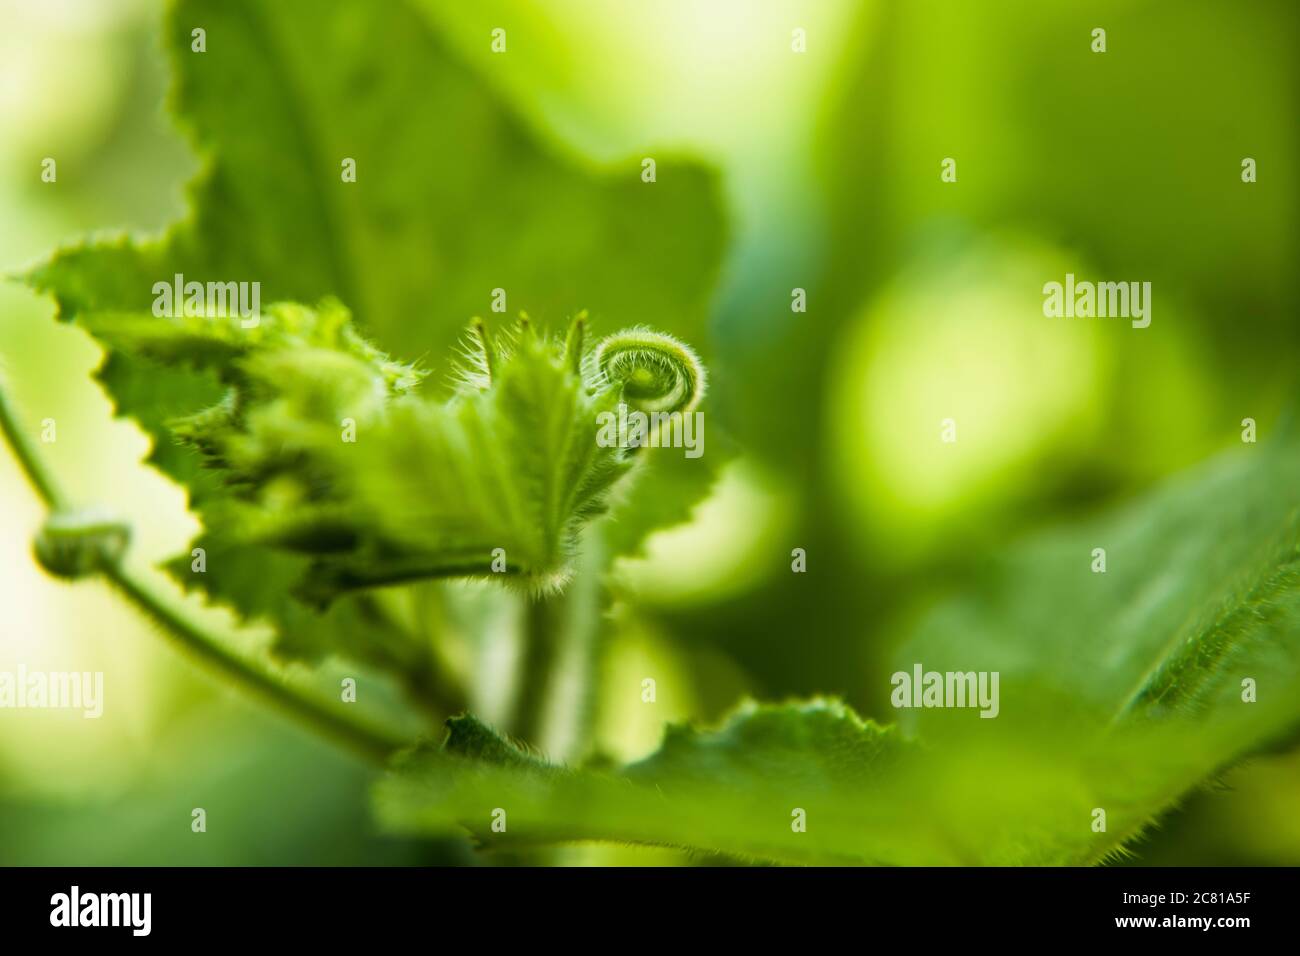 Closeup Butternut Squash tendrils curled up in leaf Stock Photo